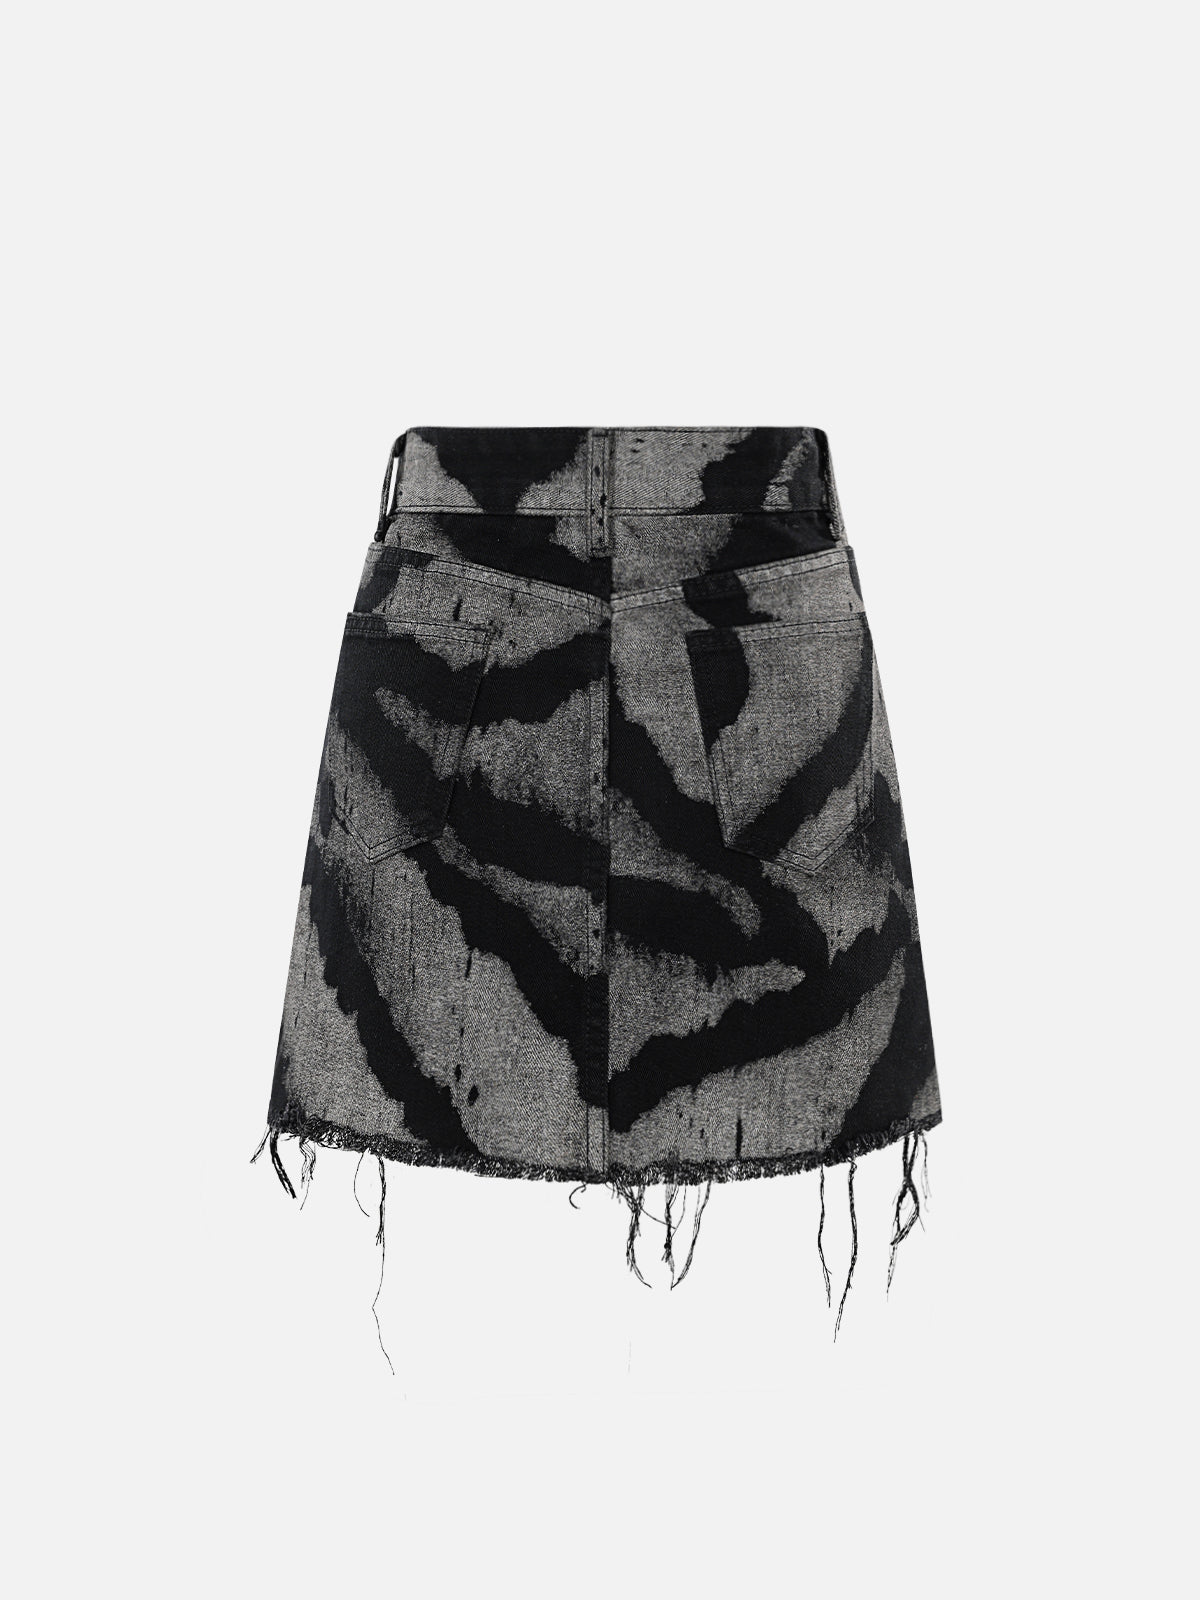 NEV Chain Tie-Dye Raw Edge Skirt